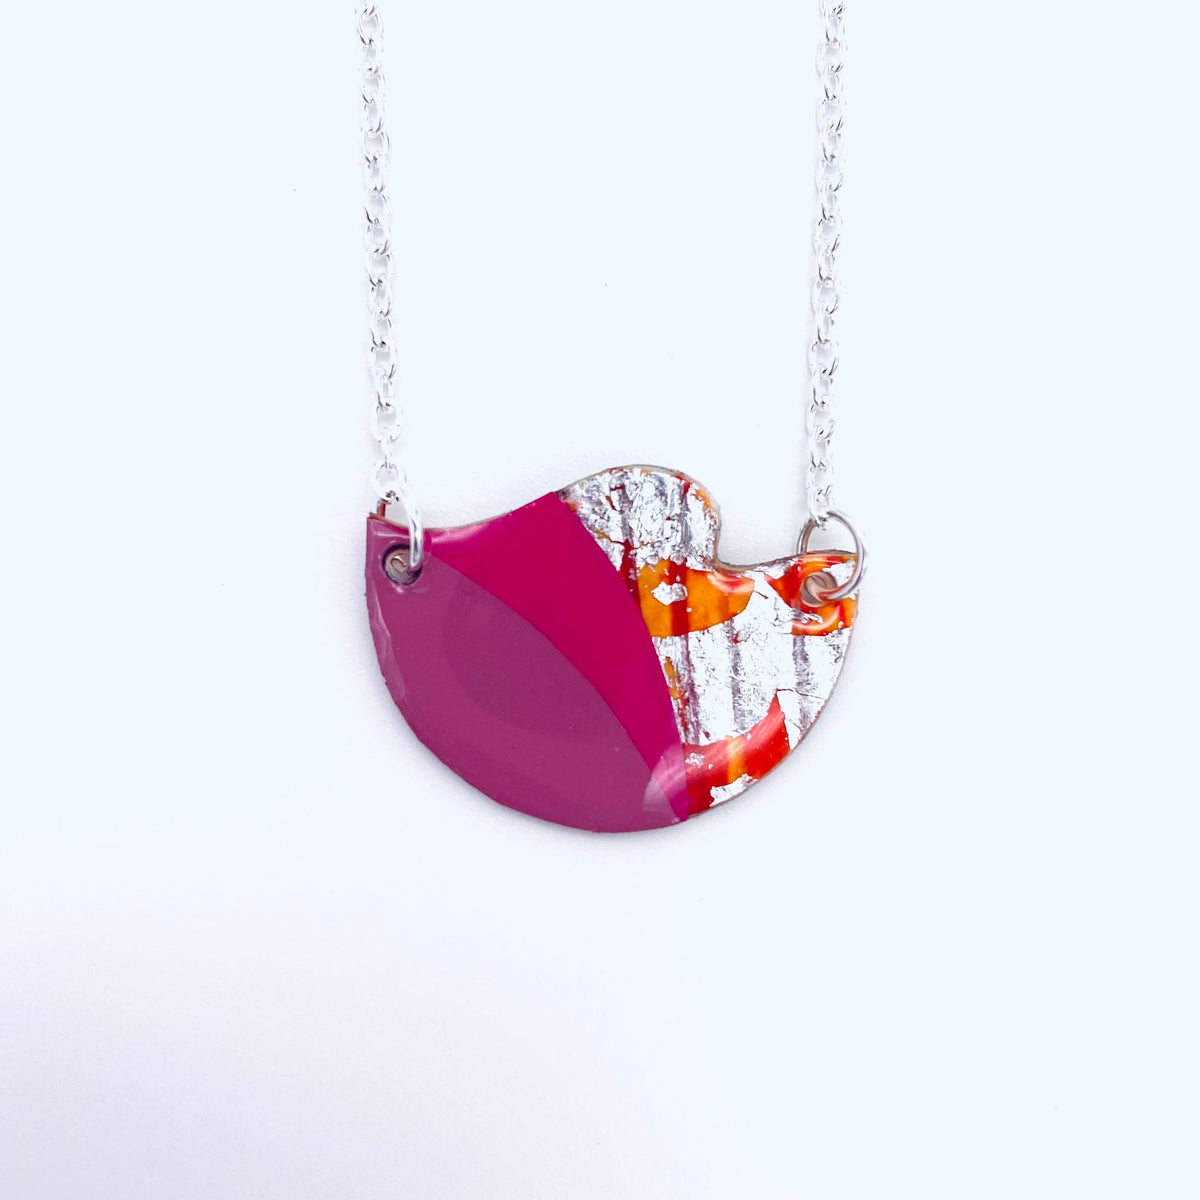 Tonn sgraffito necklace in orange/pinks/silver